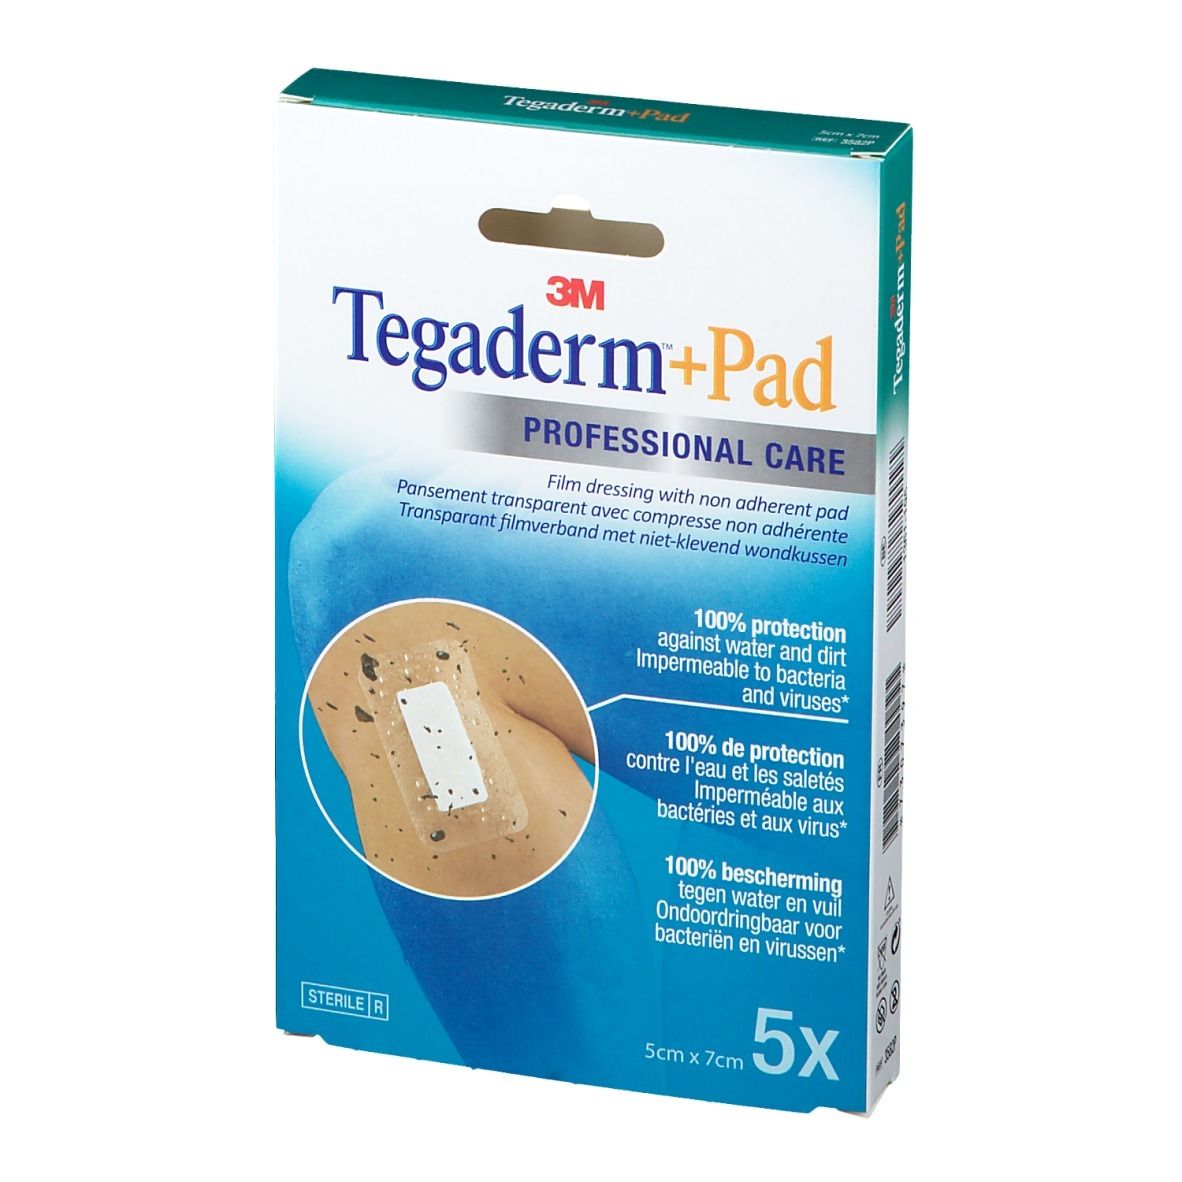 3M Tegaderm + Pad Professional Care